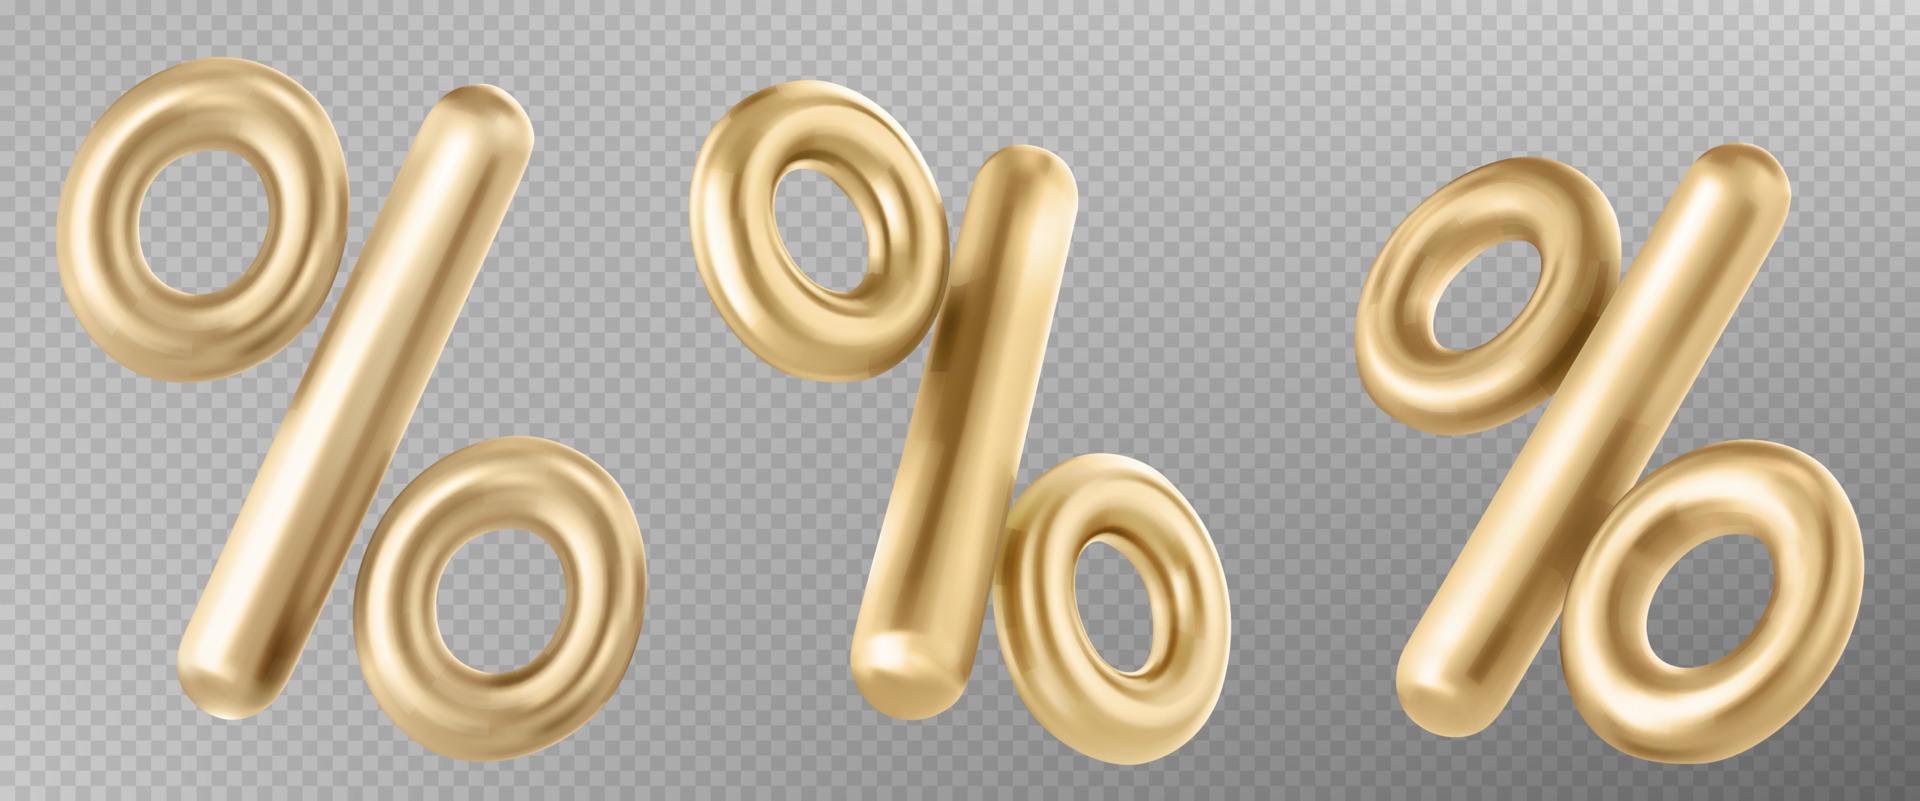 3d gold chrome percent symbol. Percentage icon vector